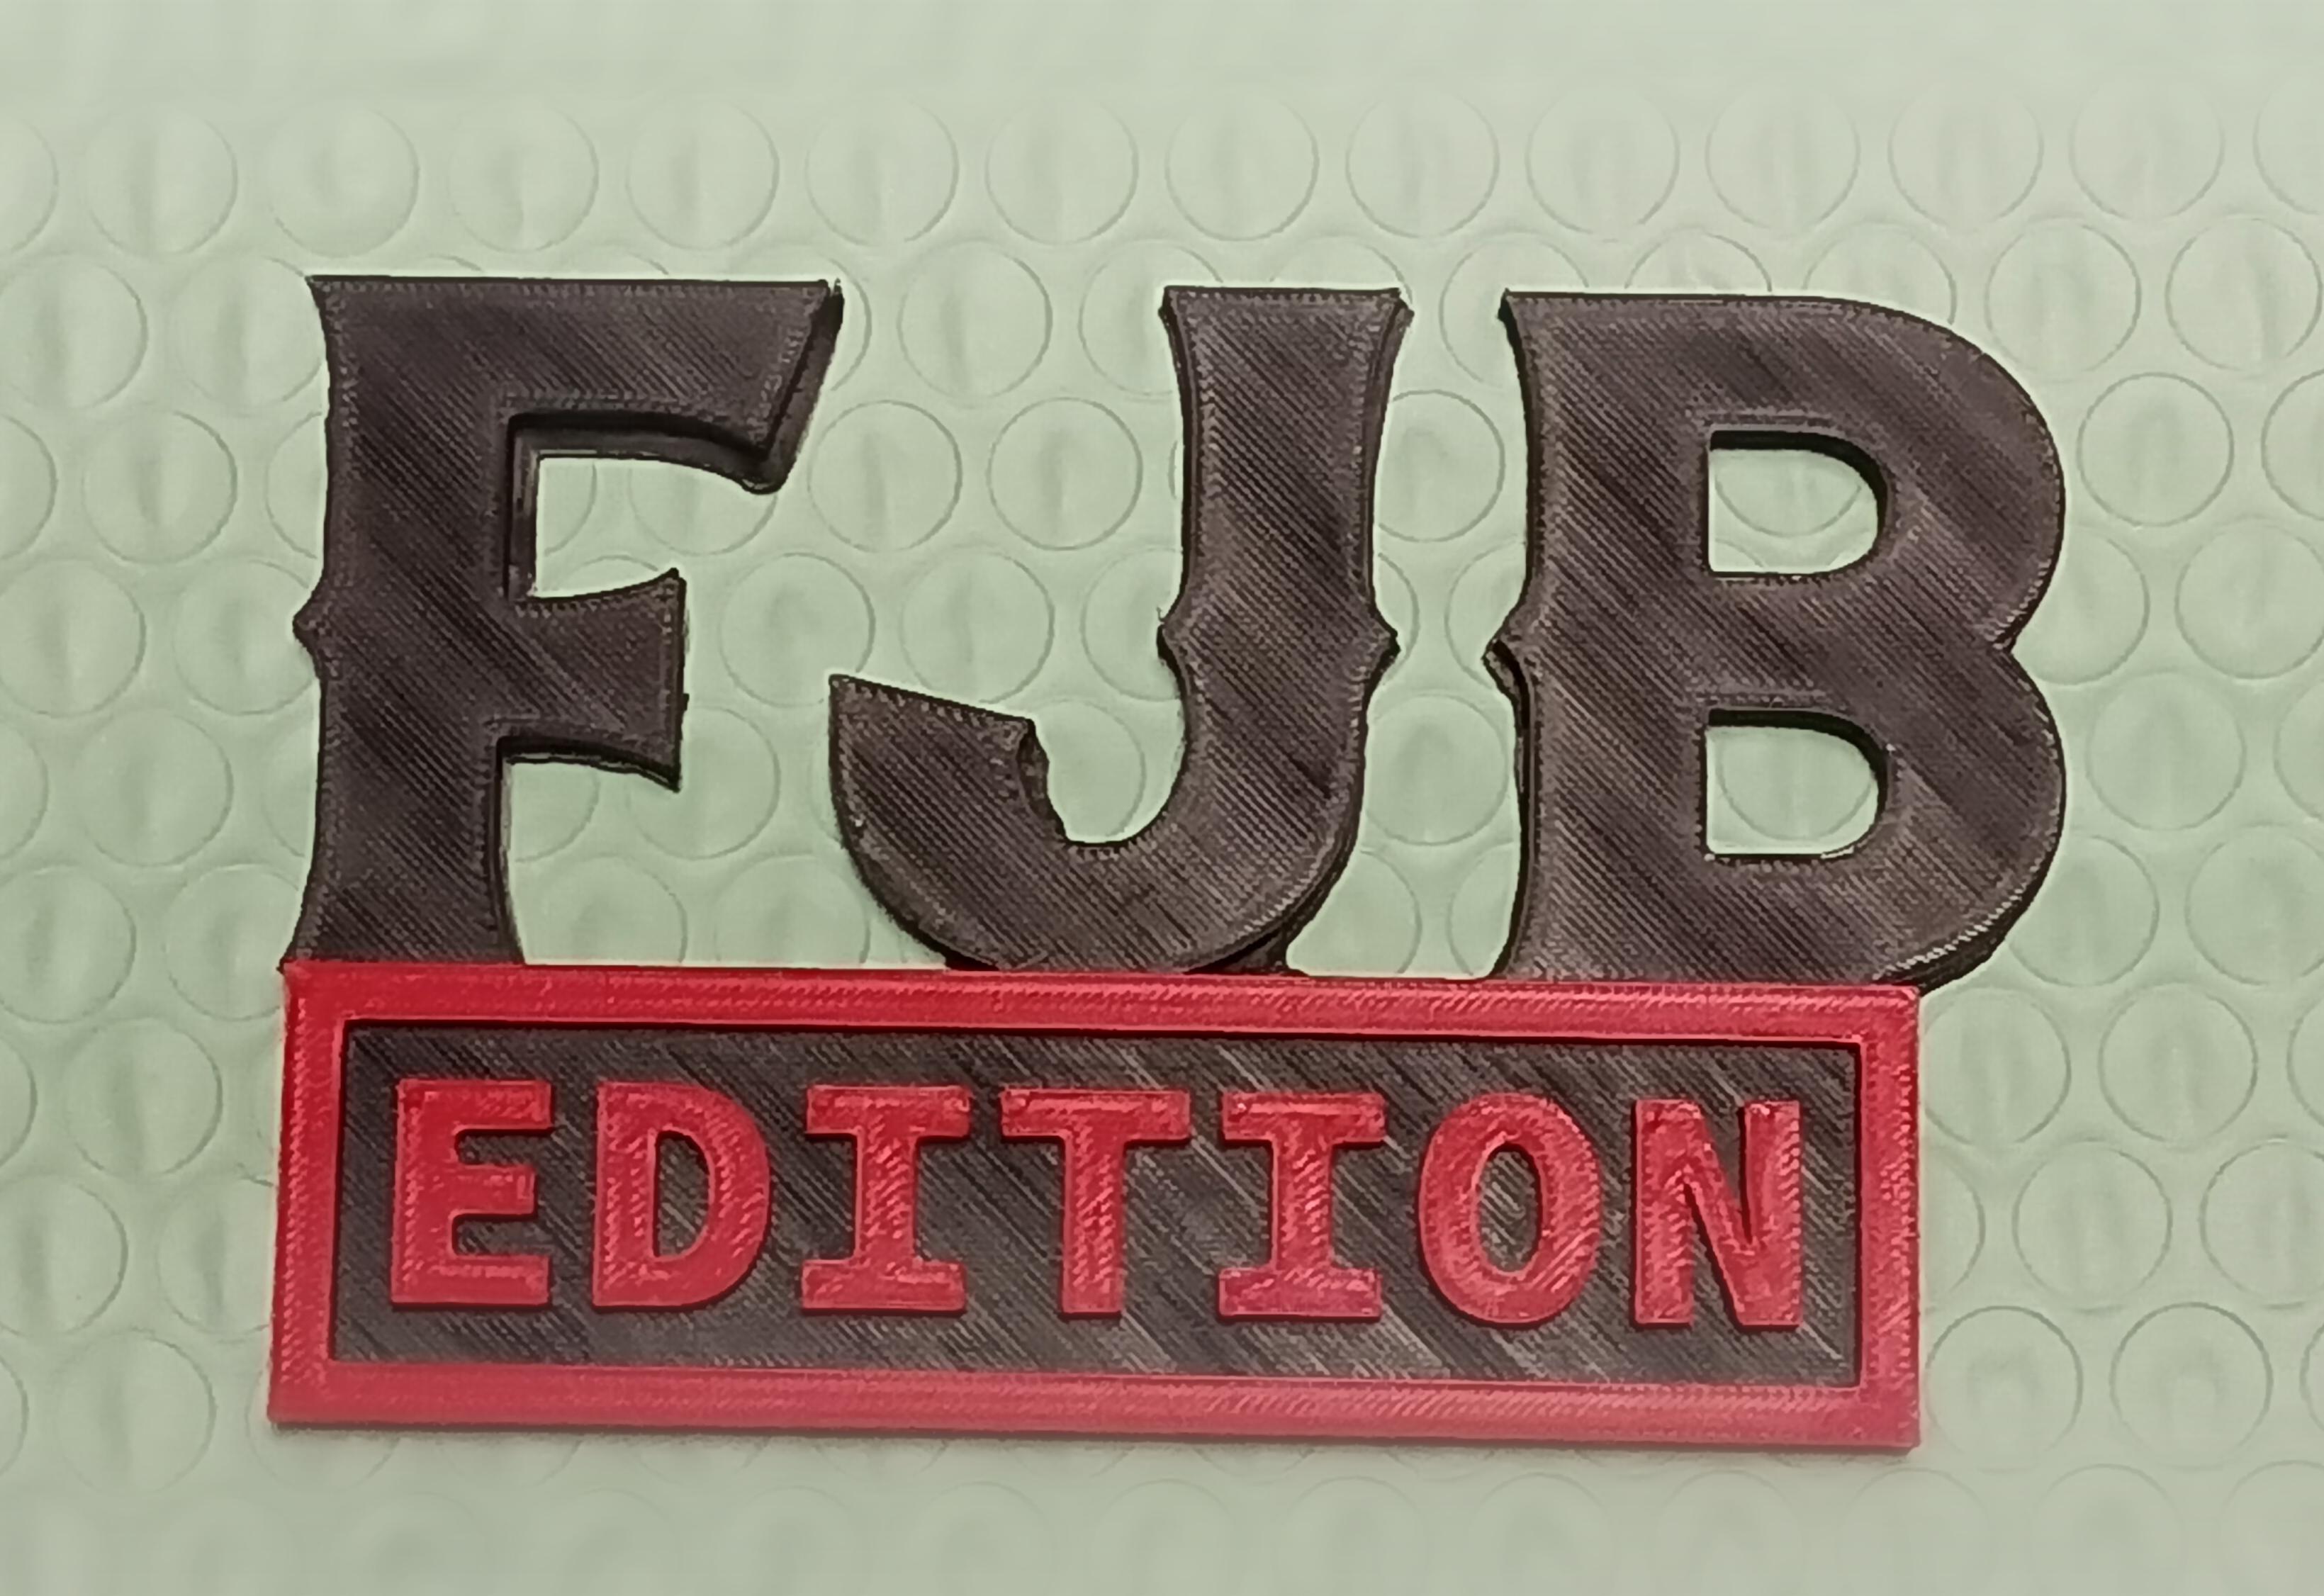  FJB edition badge multiple colors F joe biden  3d model